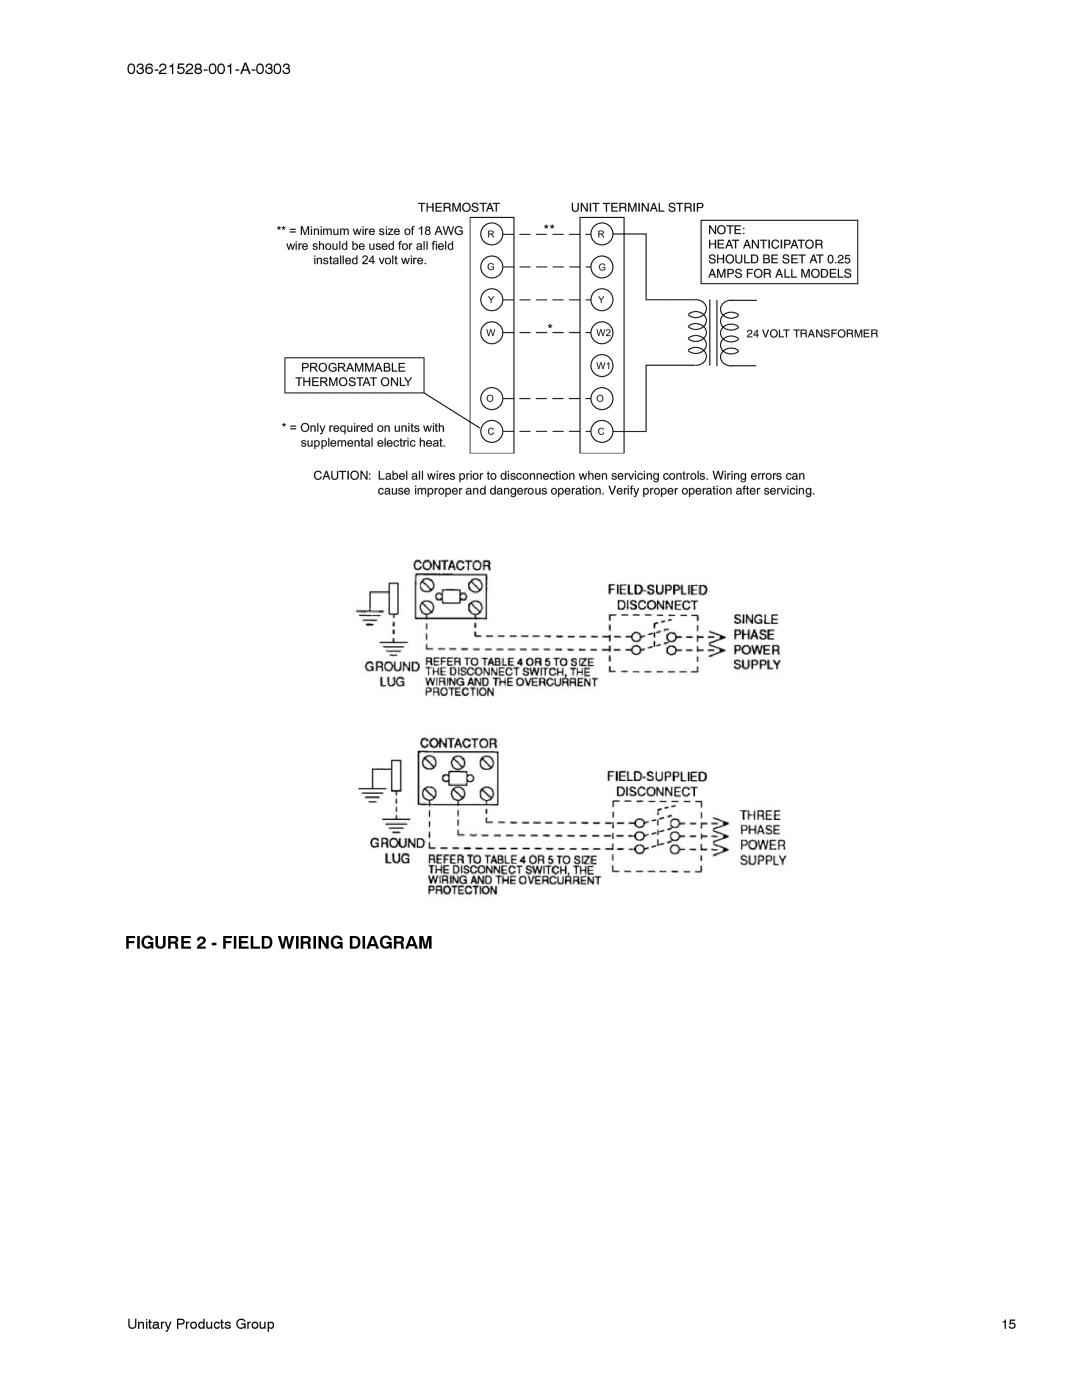 York B1HP024 THRU 048 manual Field Wiring Diagram 